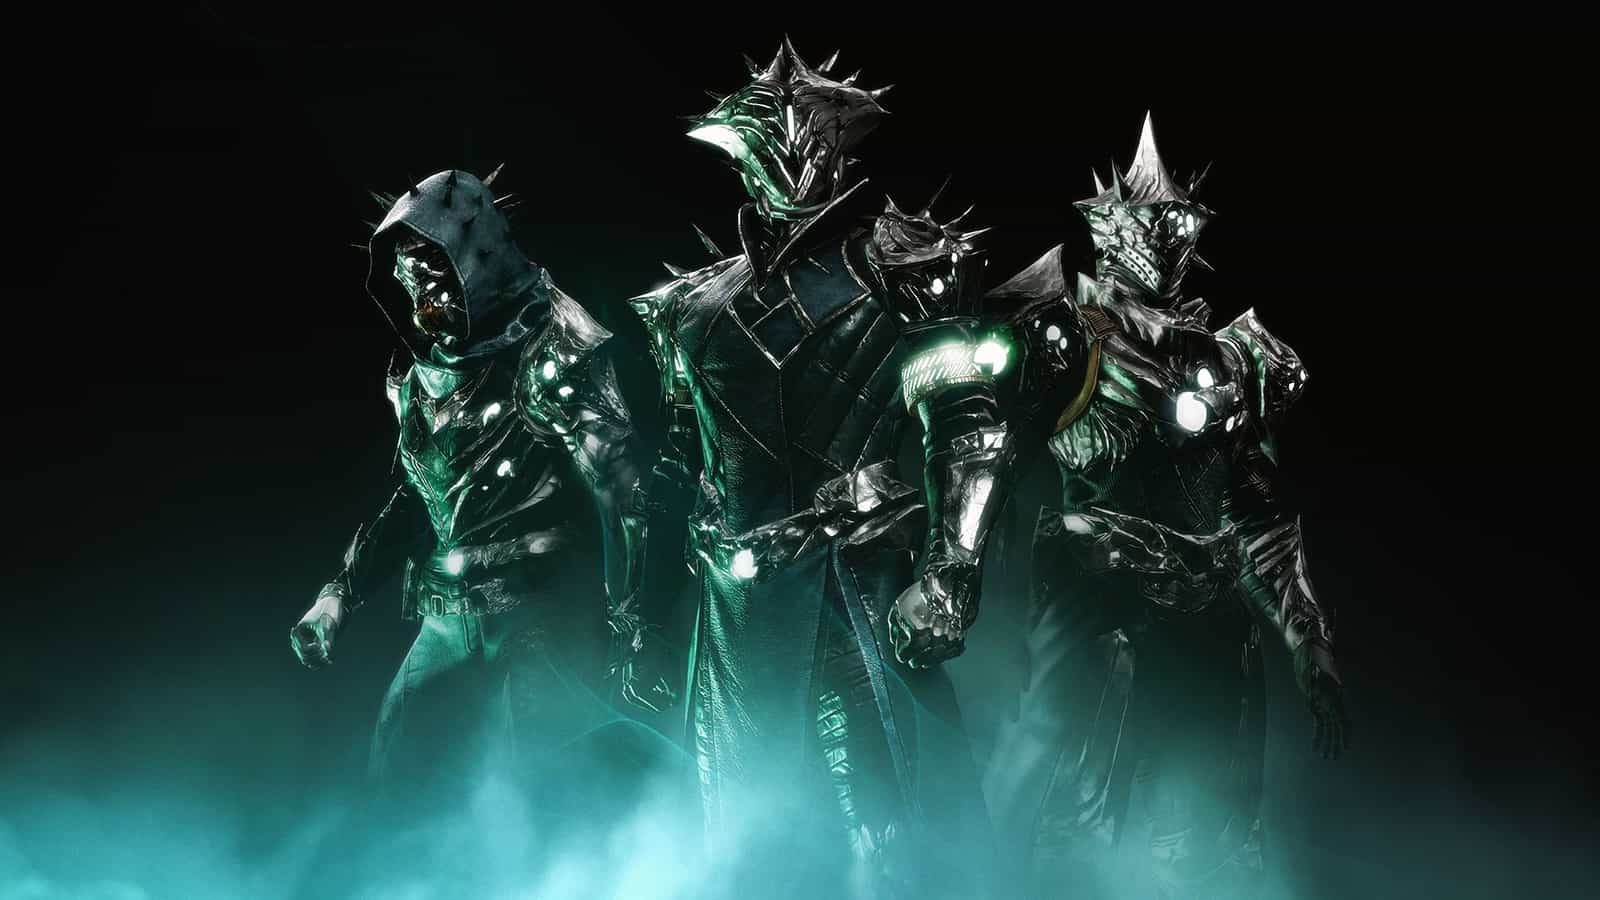 Grasp of Avarice armor Destiny 2 featured